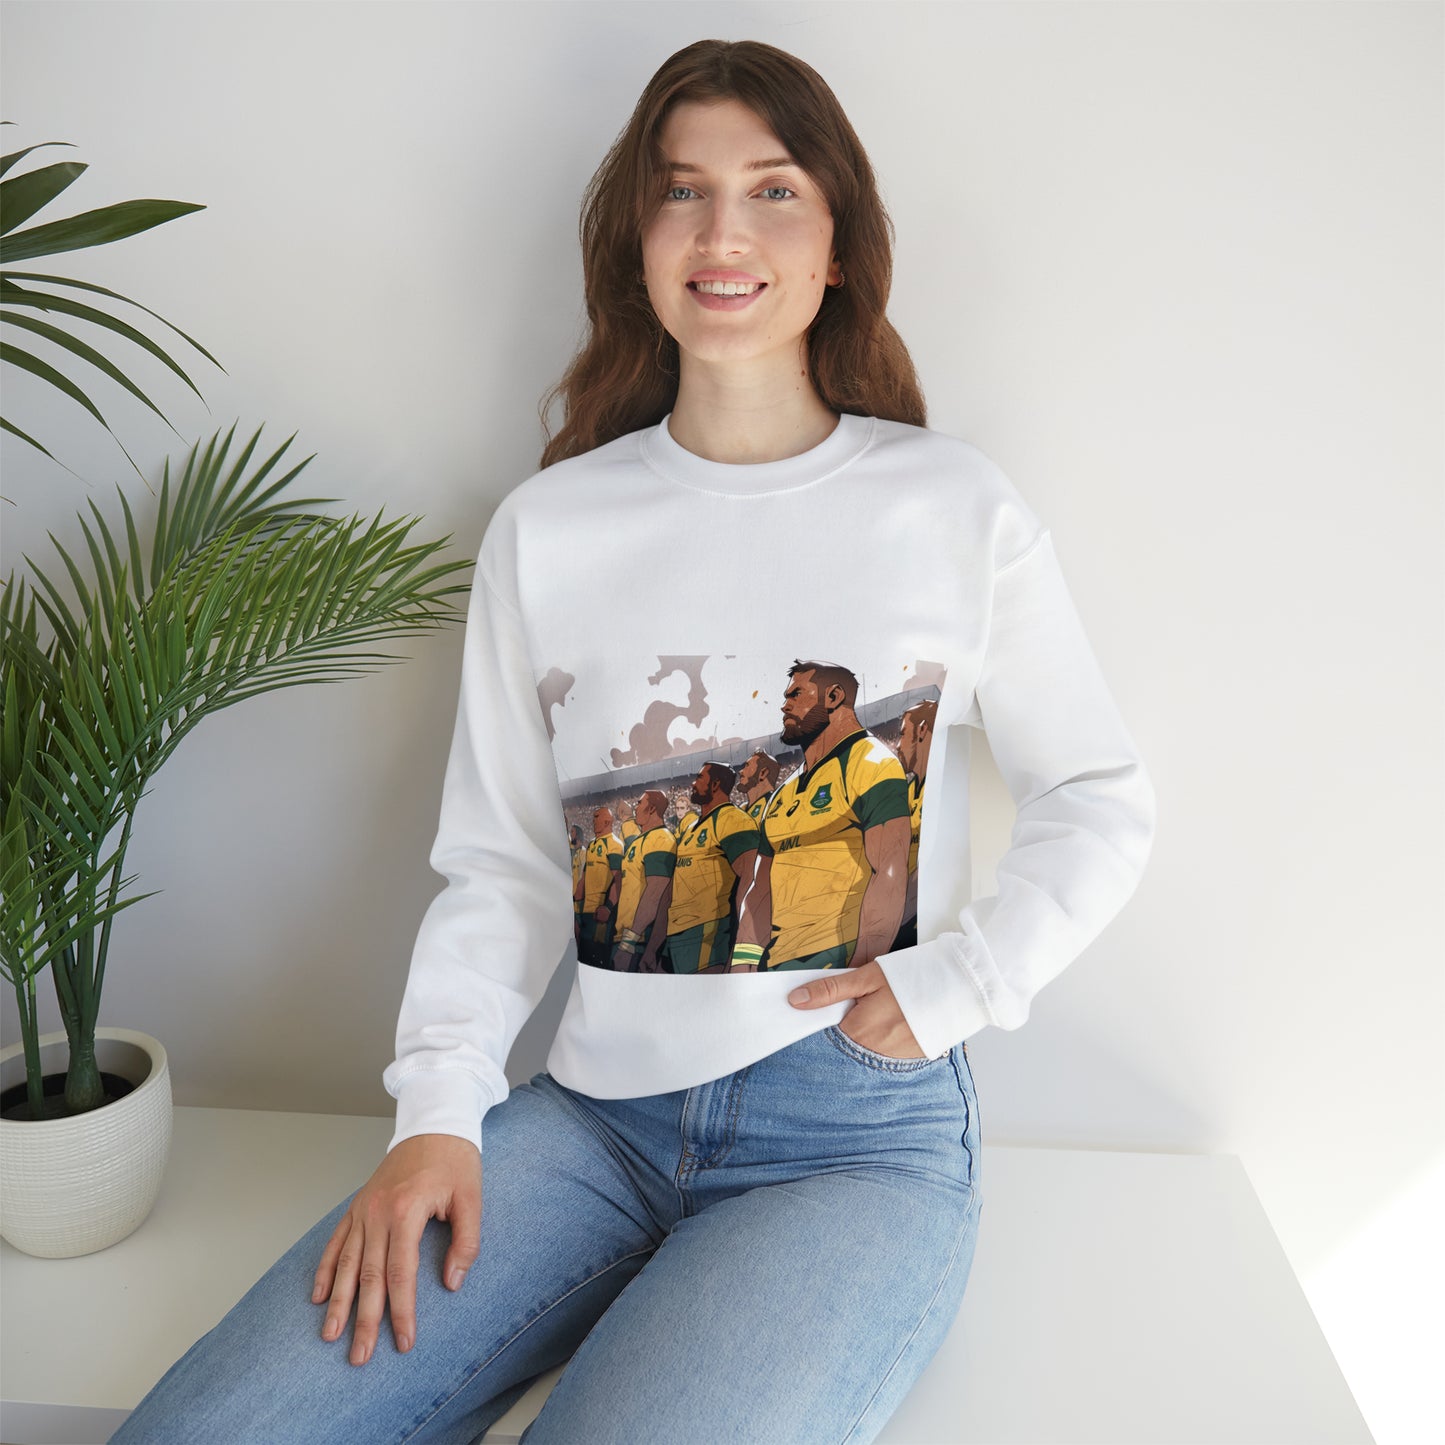 Ready Australia - light sweatshirts